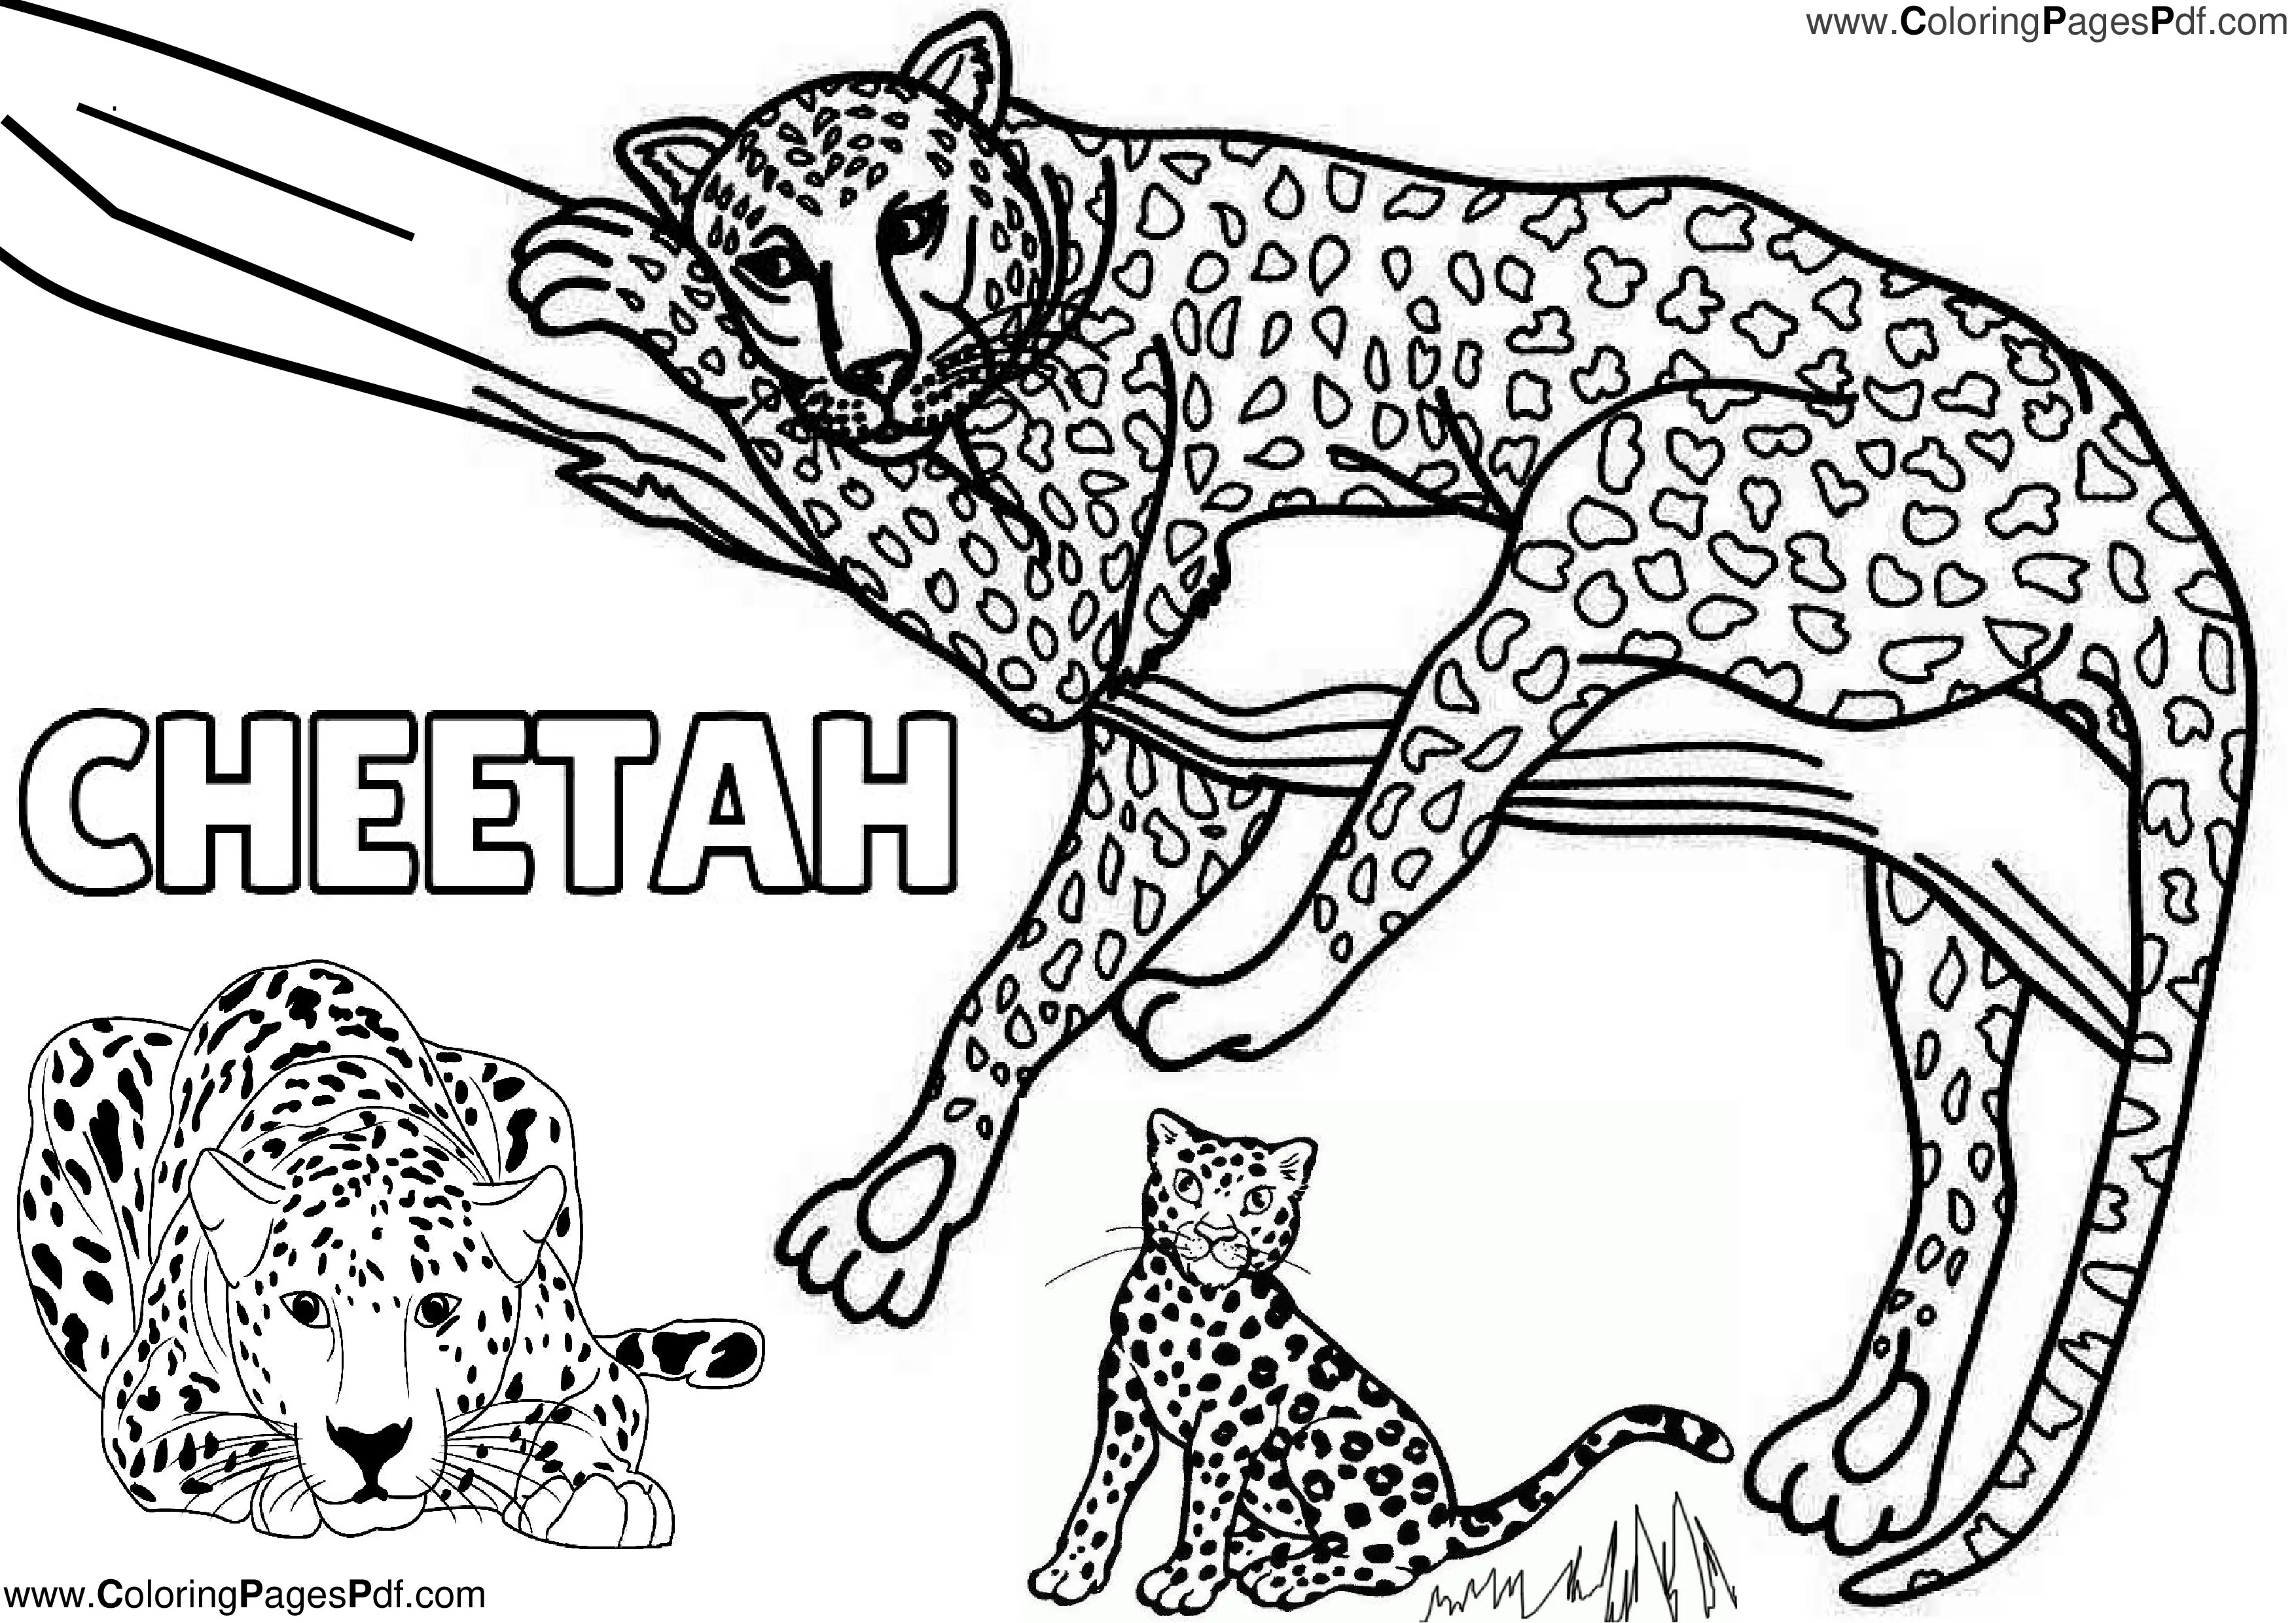 Cheetah coloring pages printable